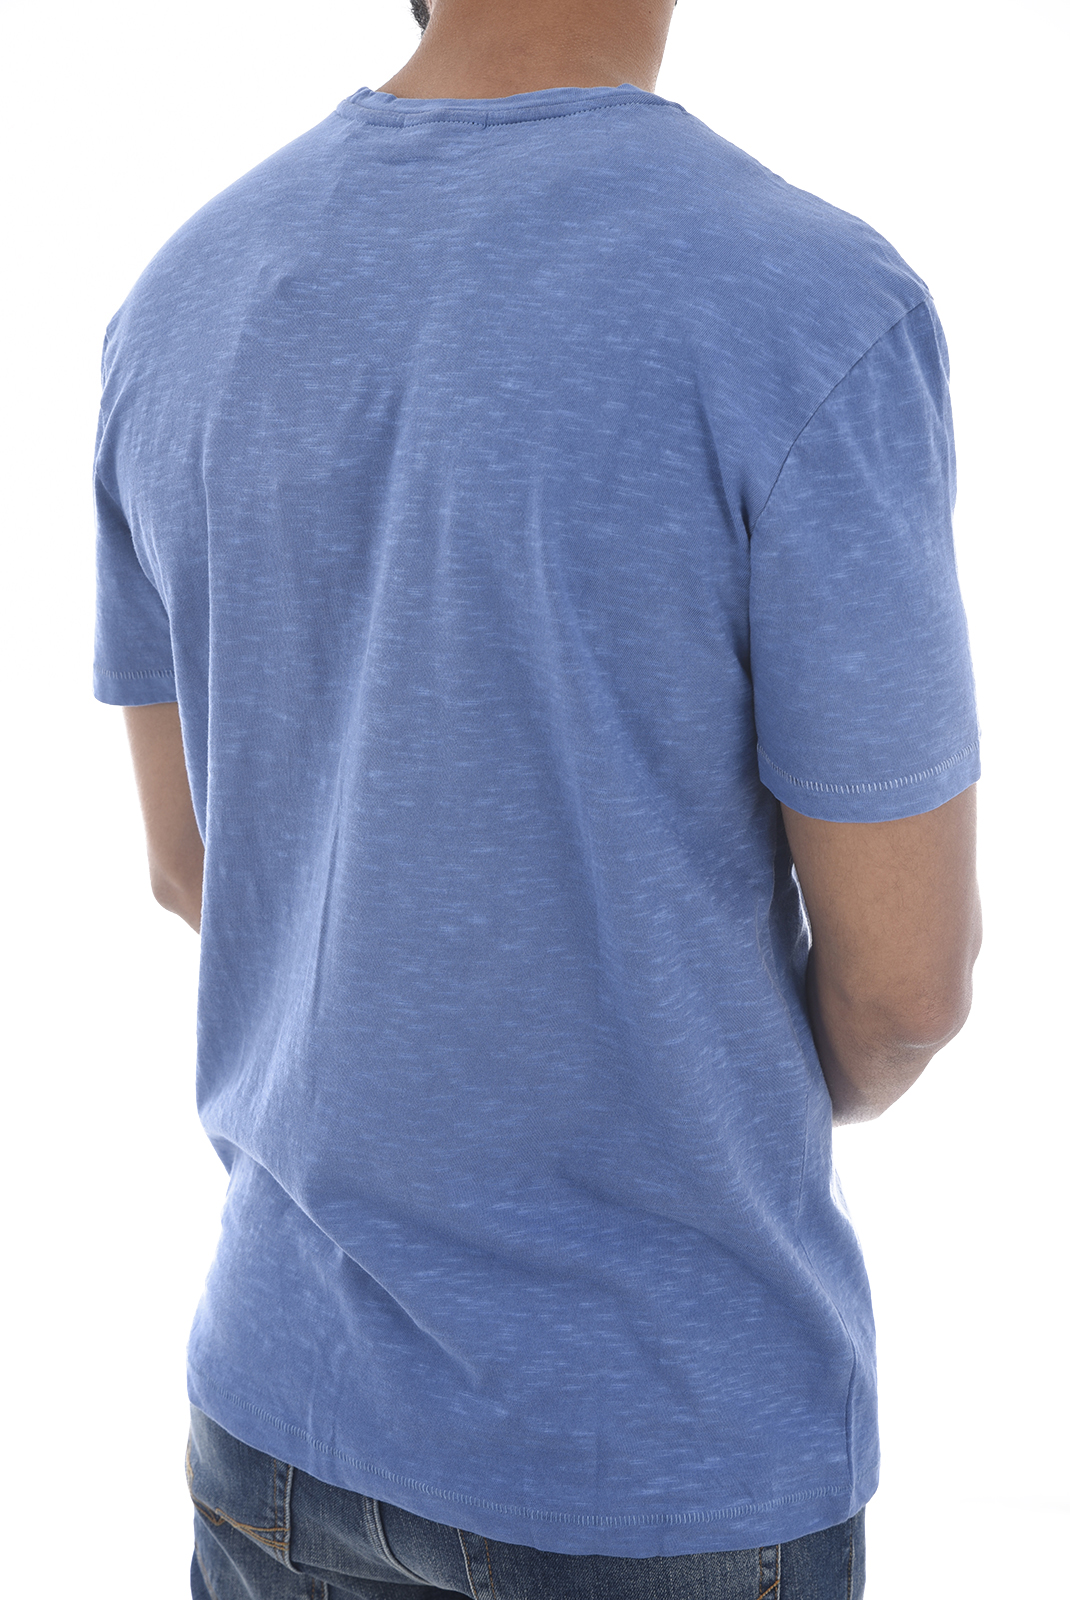 Tee-shirt bleu busar homme - Kaporal 